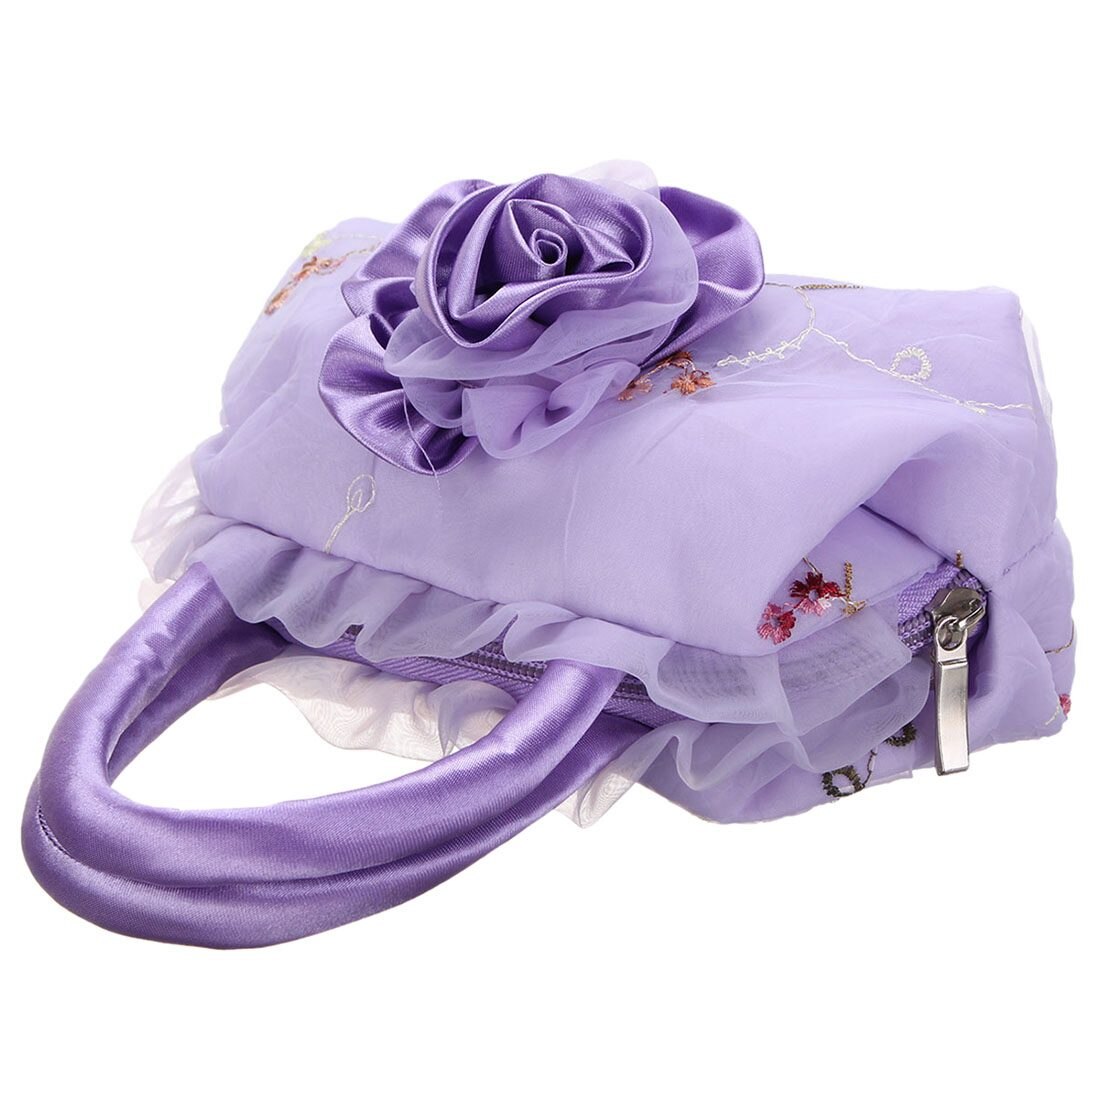 Children Flower Bag Handbag Purse Fashion Gift Clutch Purse Tote, Pink - ebowsos